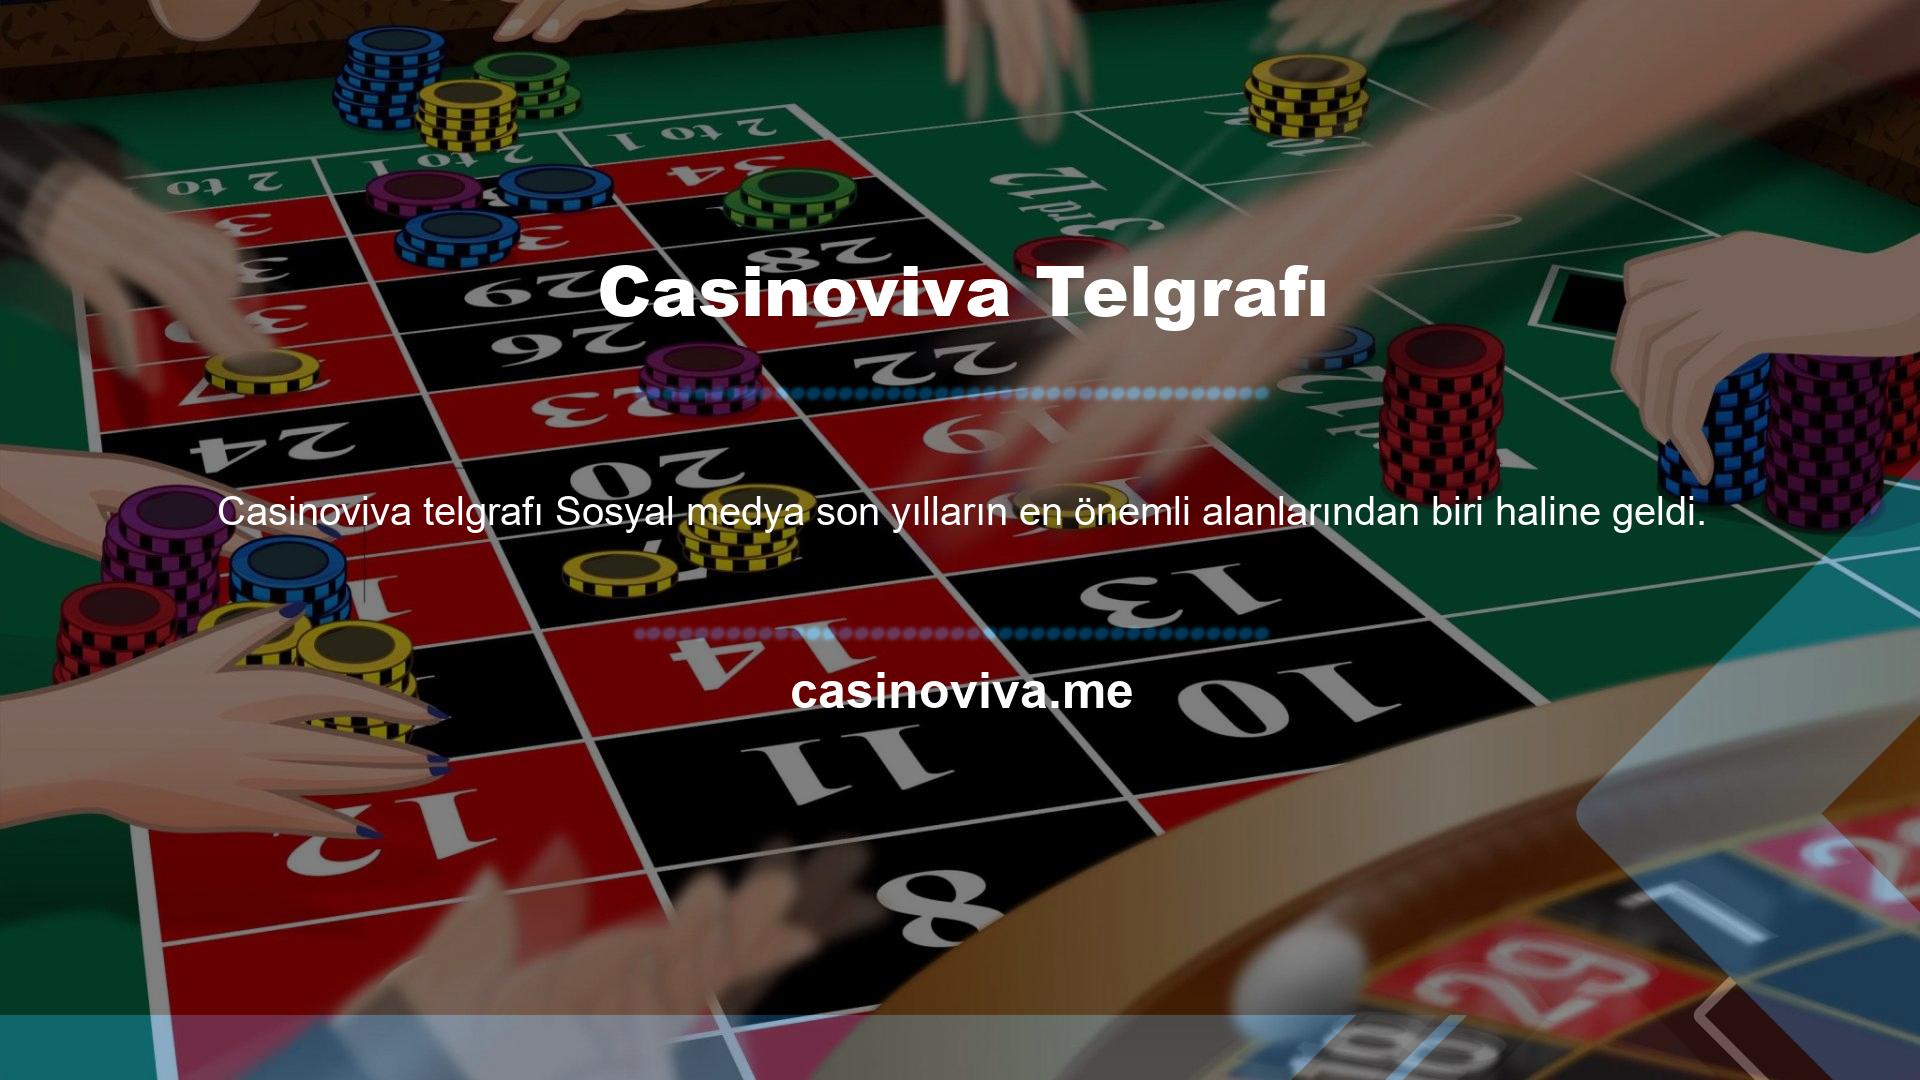 Casinoviva telgrafı